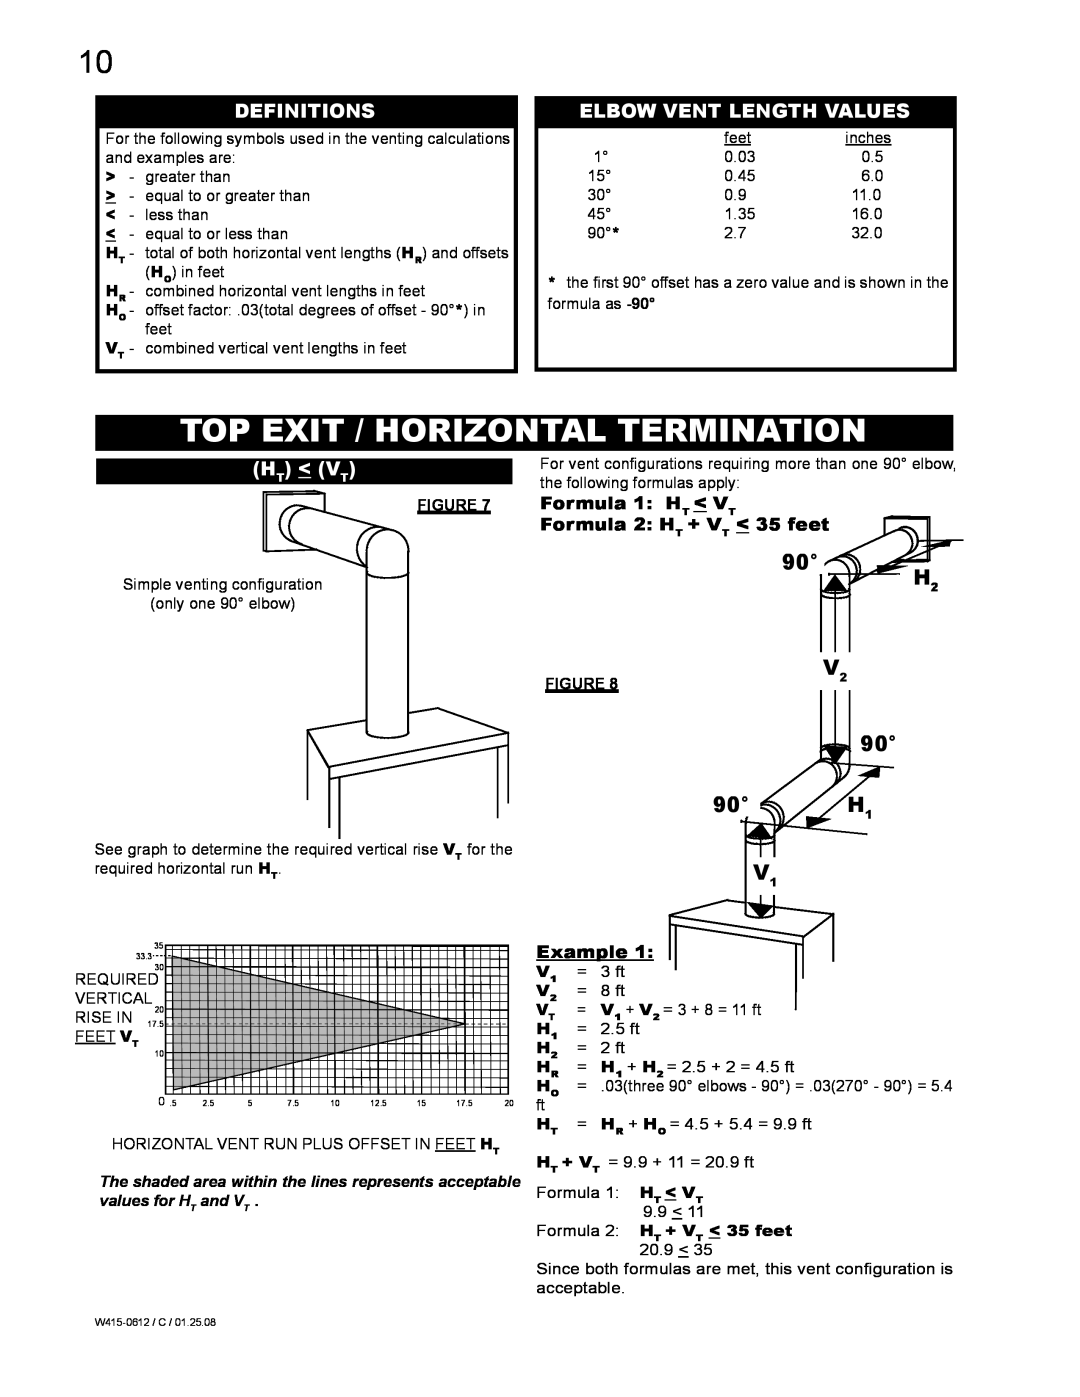 Napoleon Fireplaces GD19P, GD19N manual Top Exit / Horizontal Termination, Definitions, Elbow Vent Length Values, Ht Vt 